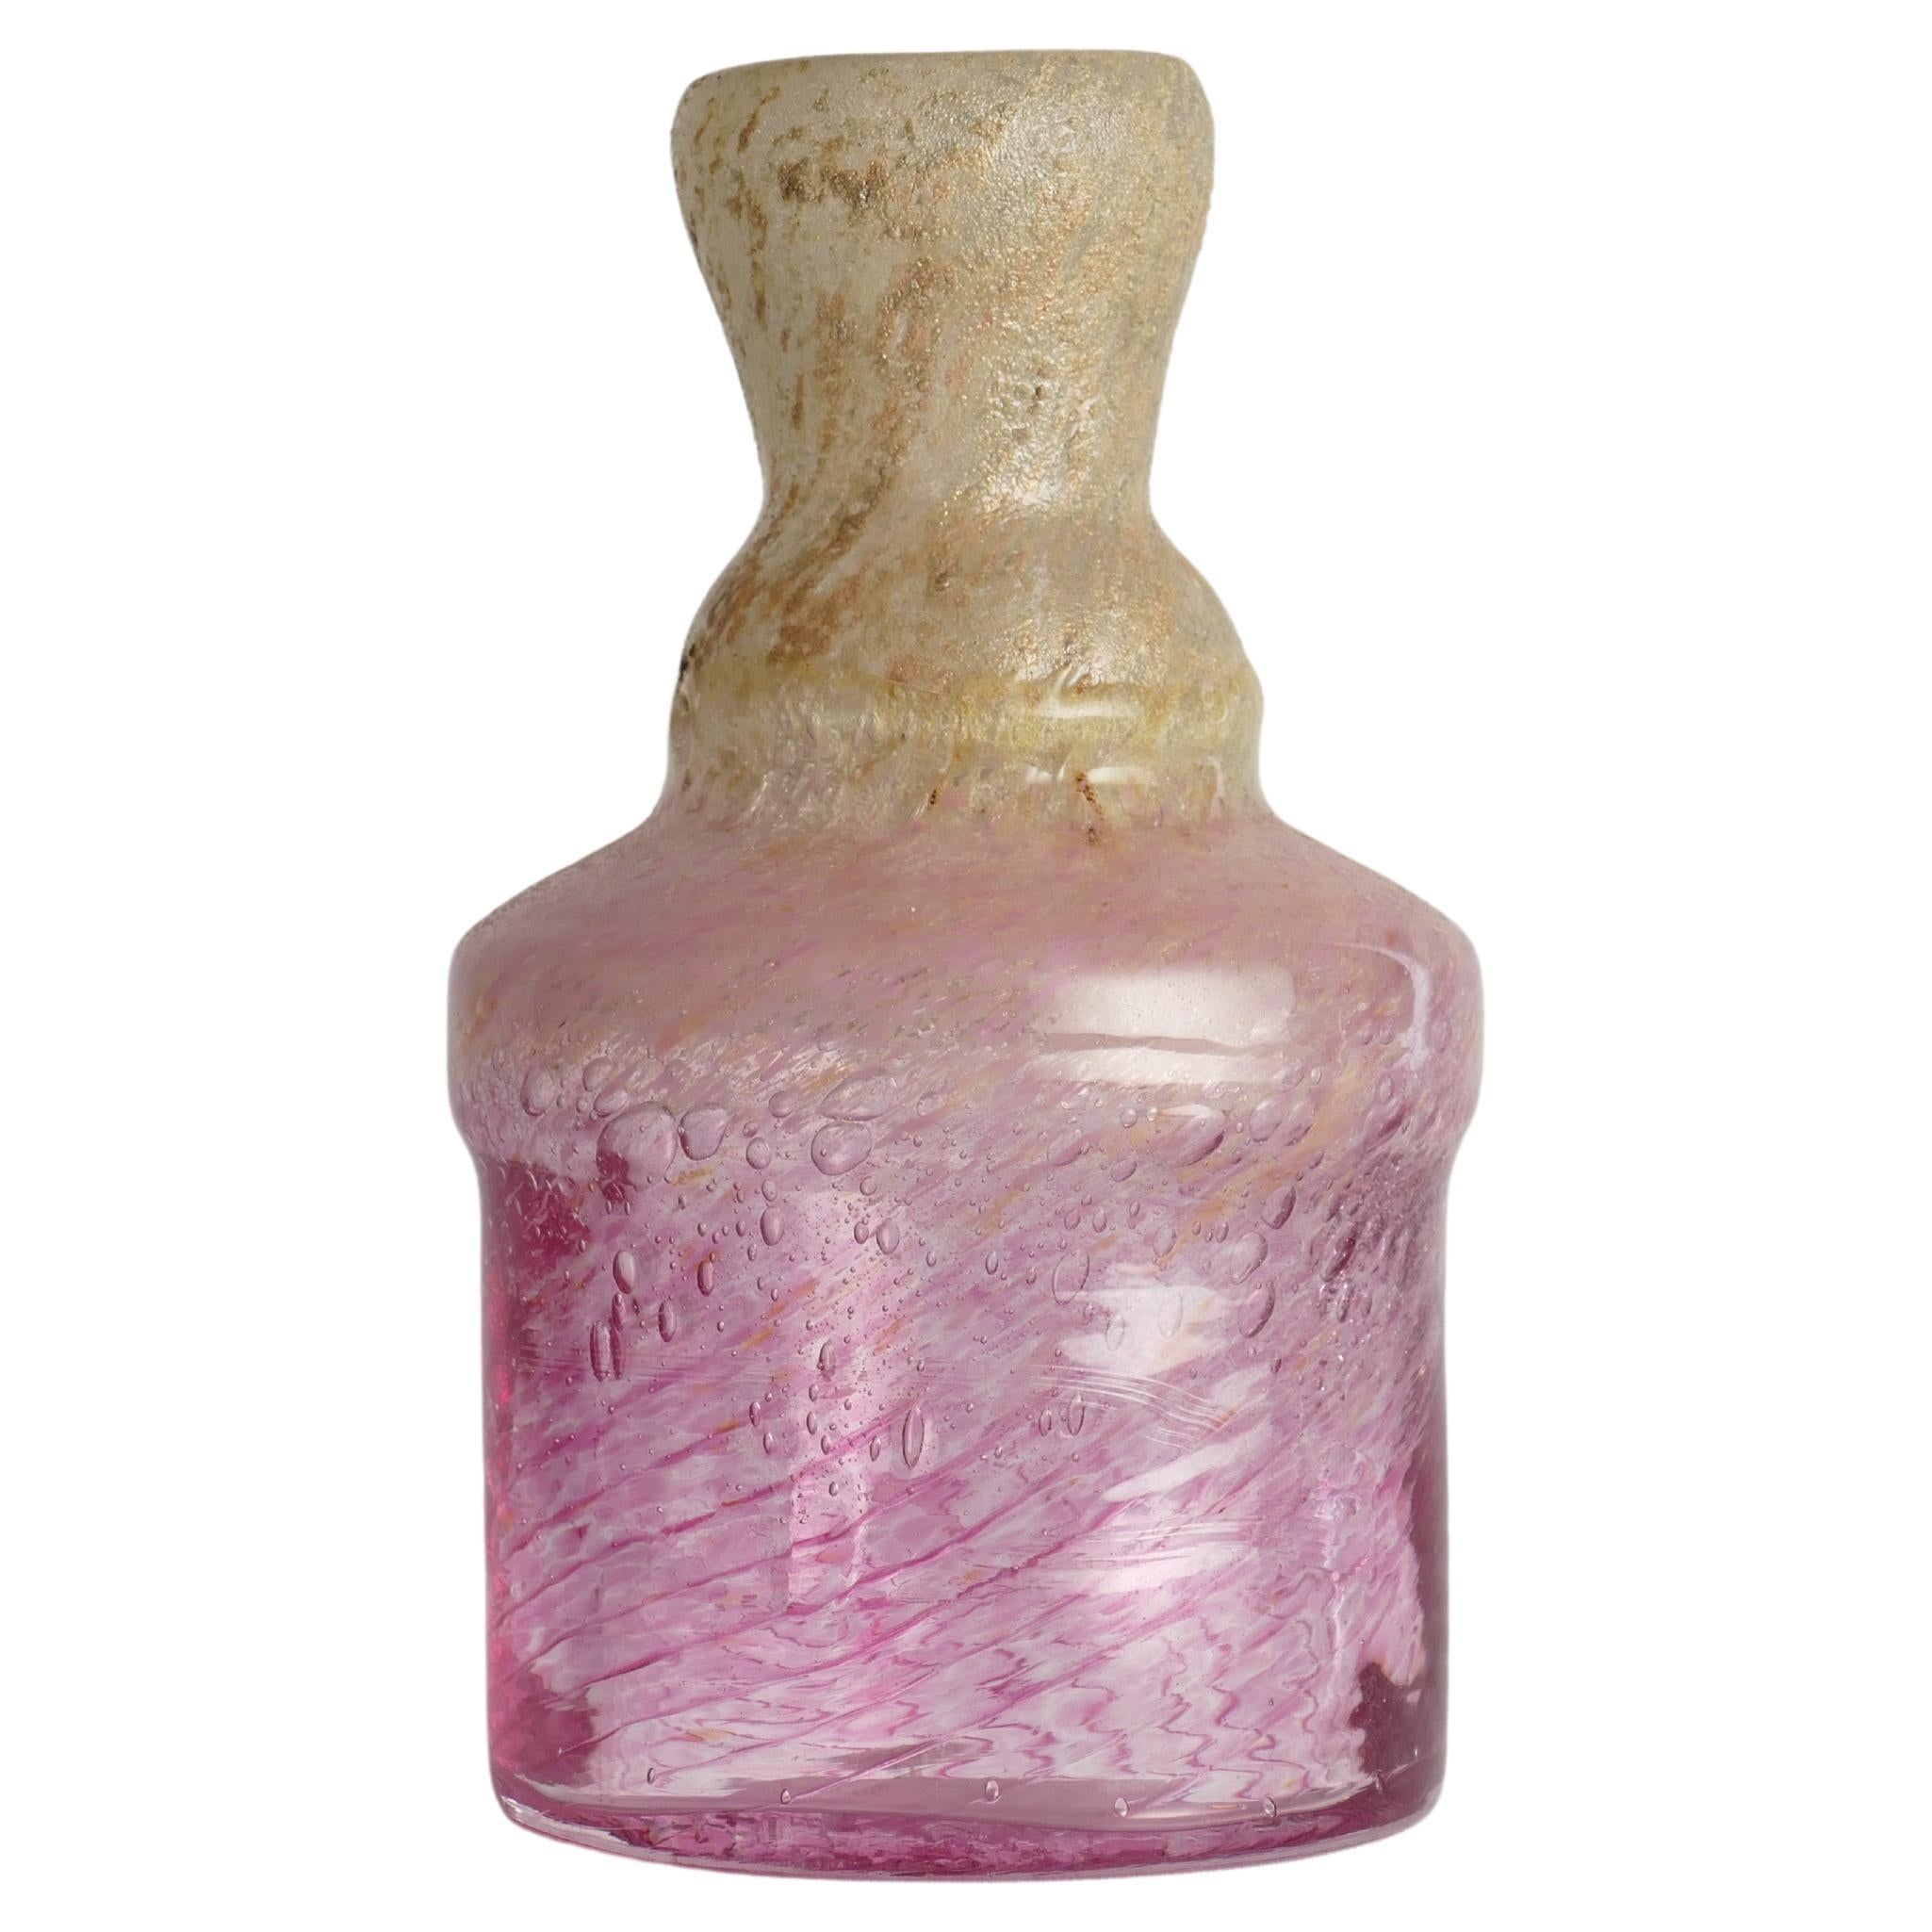 Unique Bubblegum Pink and Yellow Art Glass Vase by Milan Vobruba, Sweden 1980s